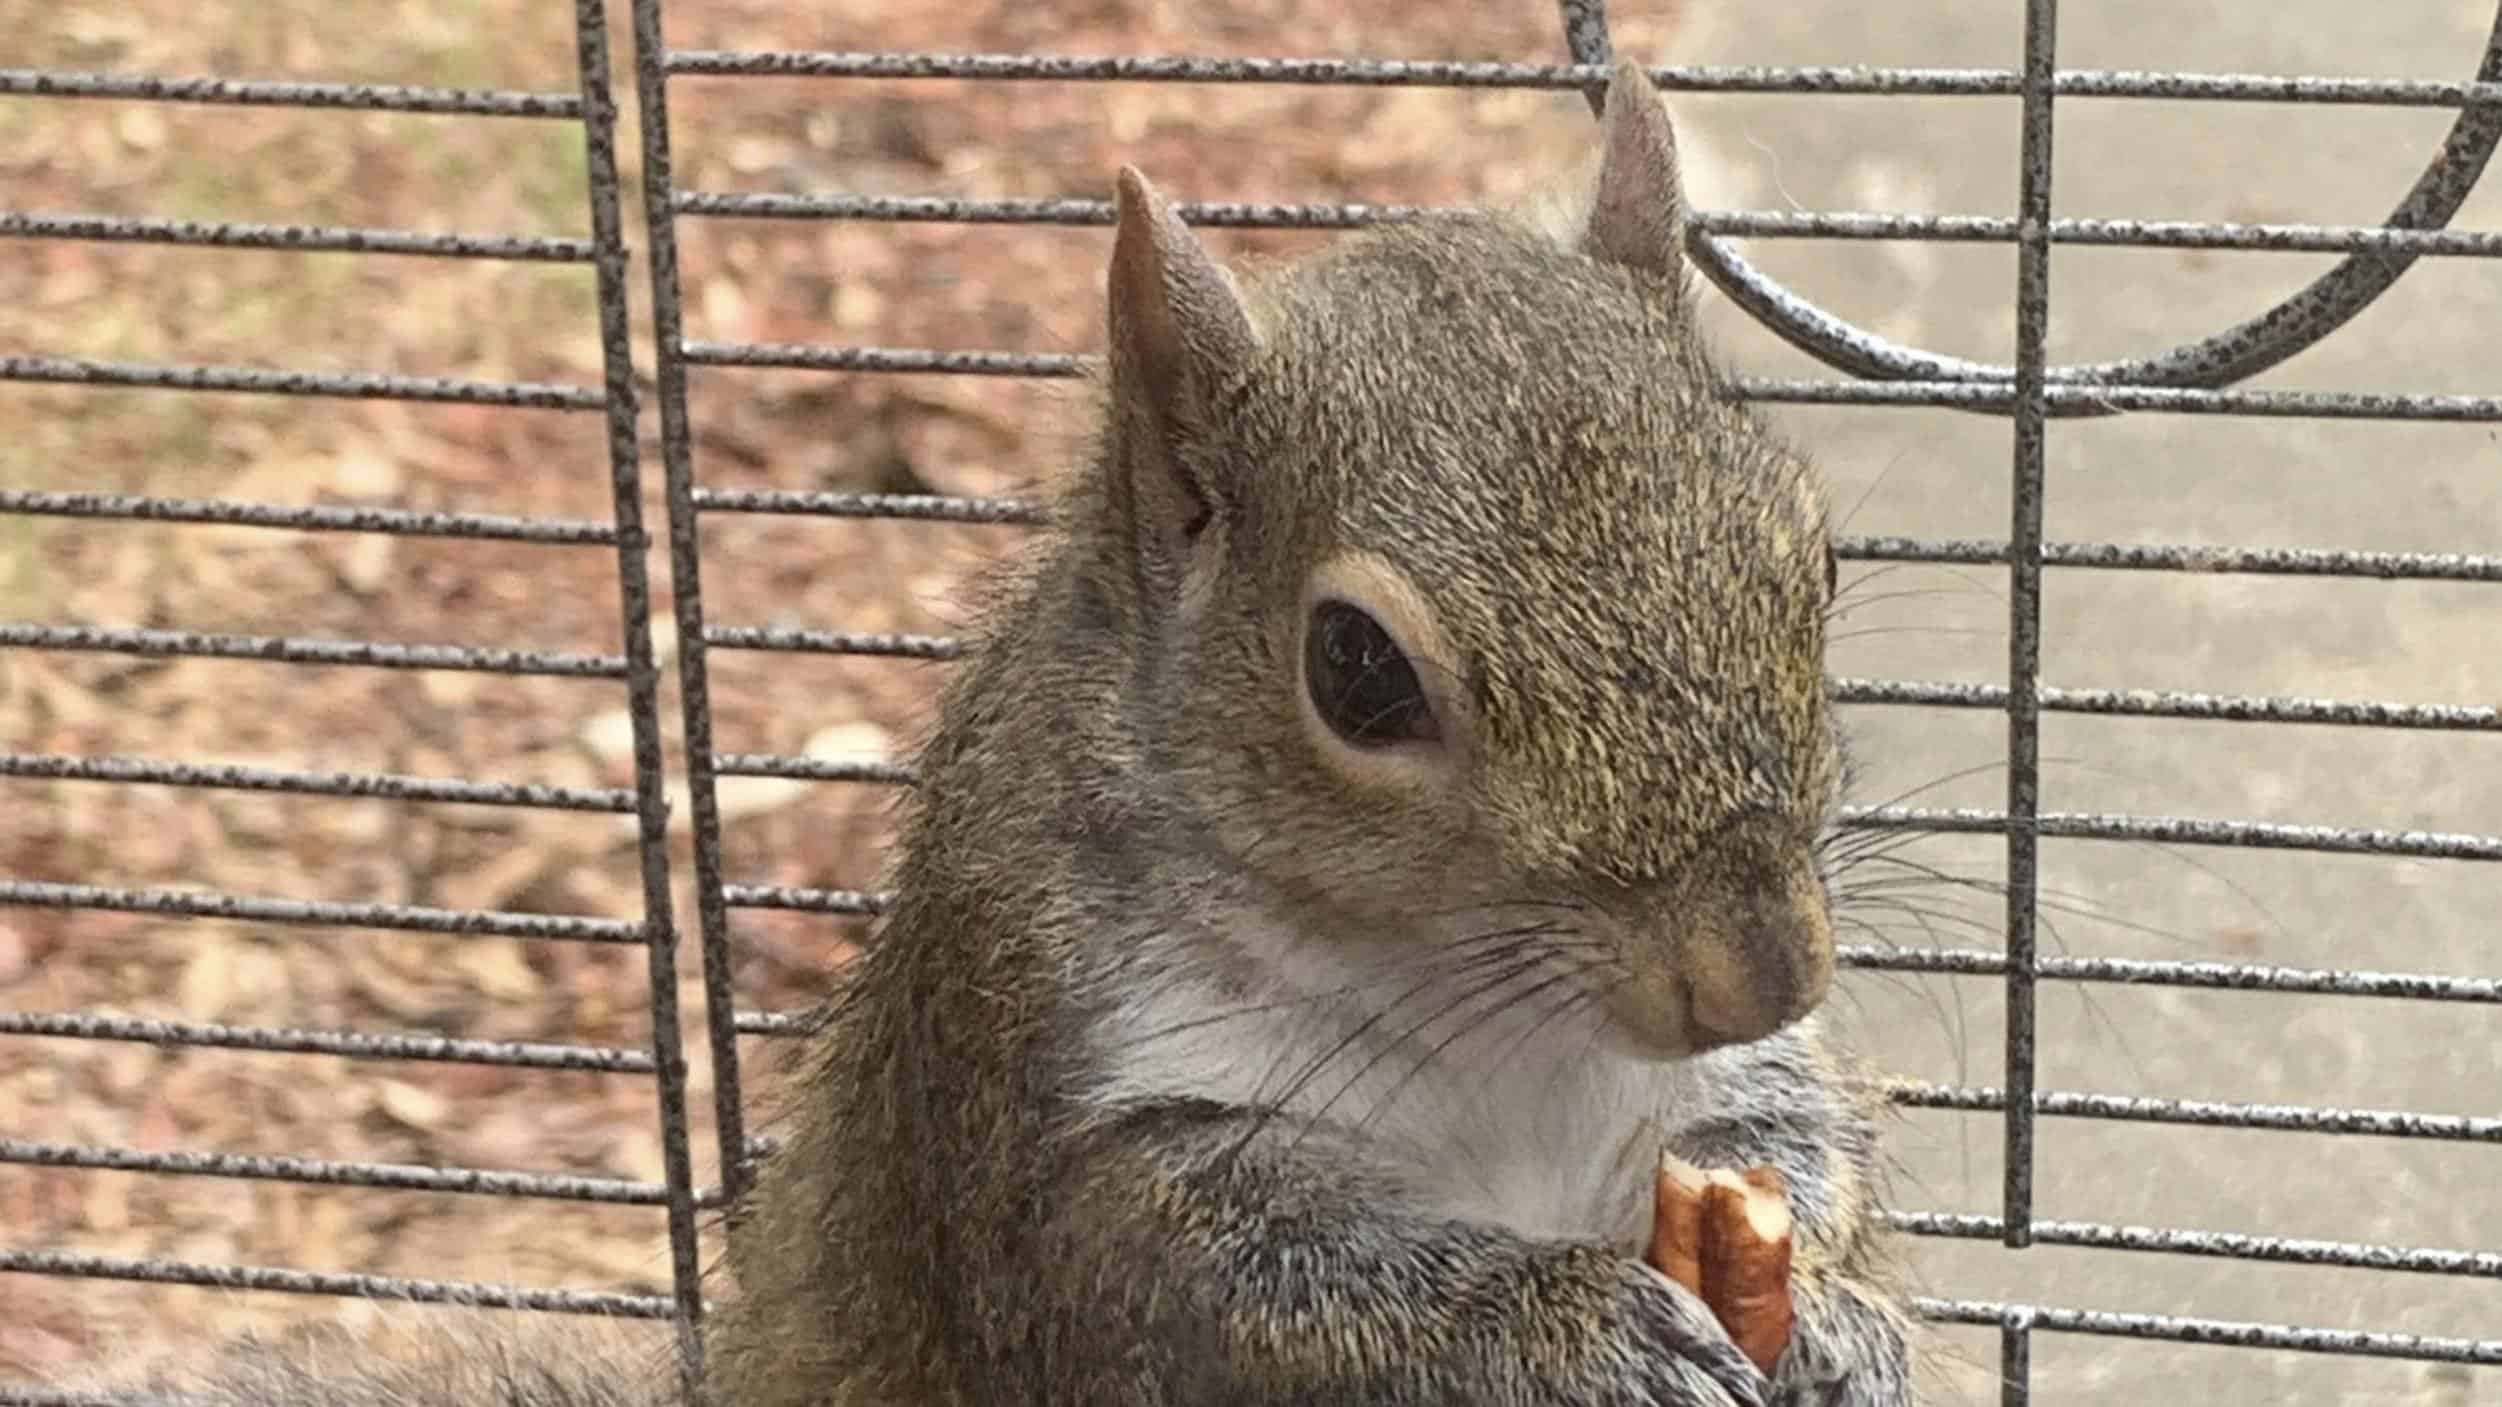 Man denies feeding Methamphetamine to make ‘attack squirrel’ more aggressive